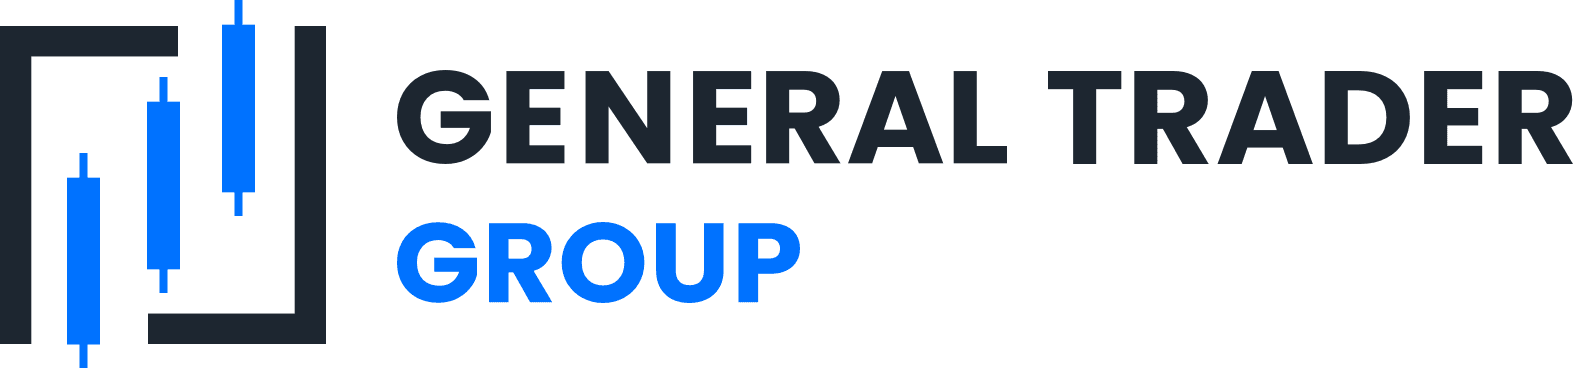 General Trader Group